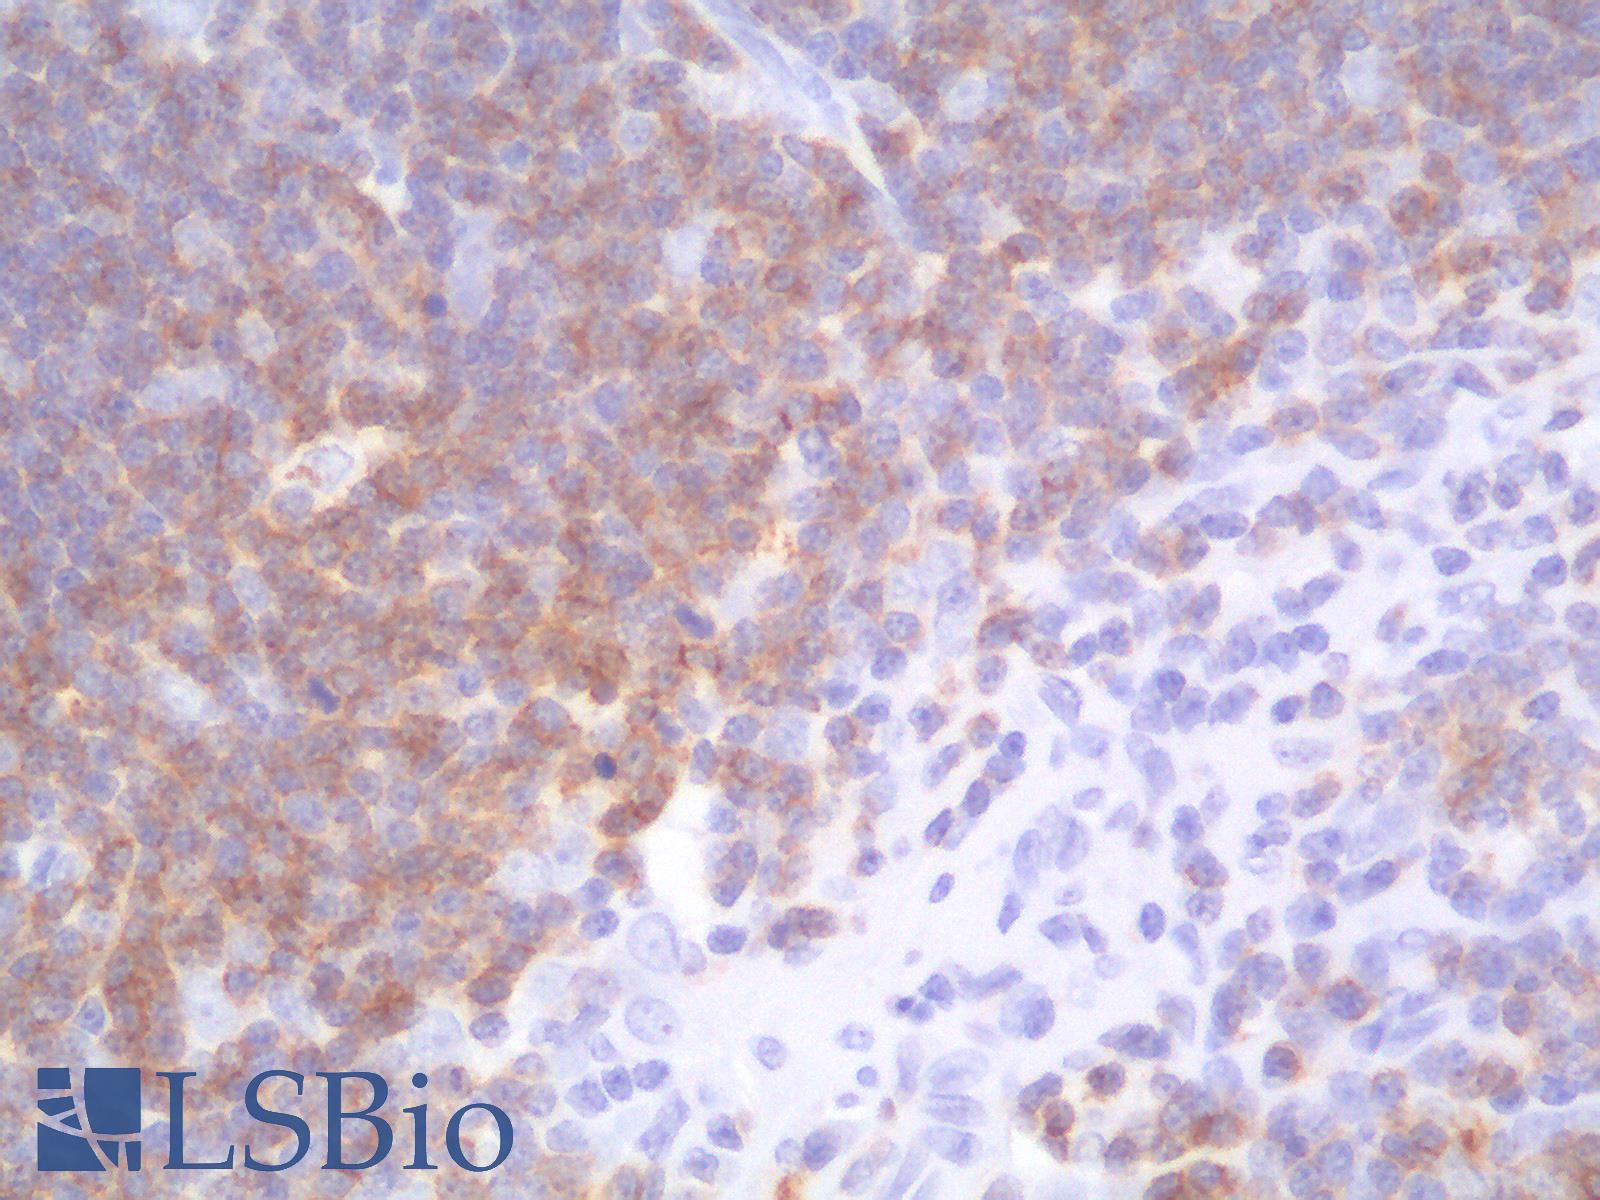 CD1A Antibody - Human Thymus: Formalin-Fixed, Paraffin-Embedded (FFPE)